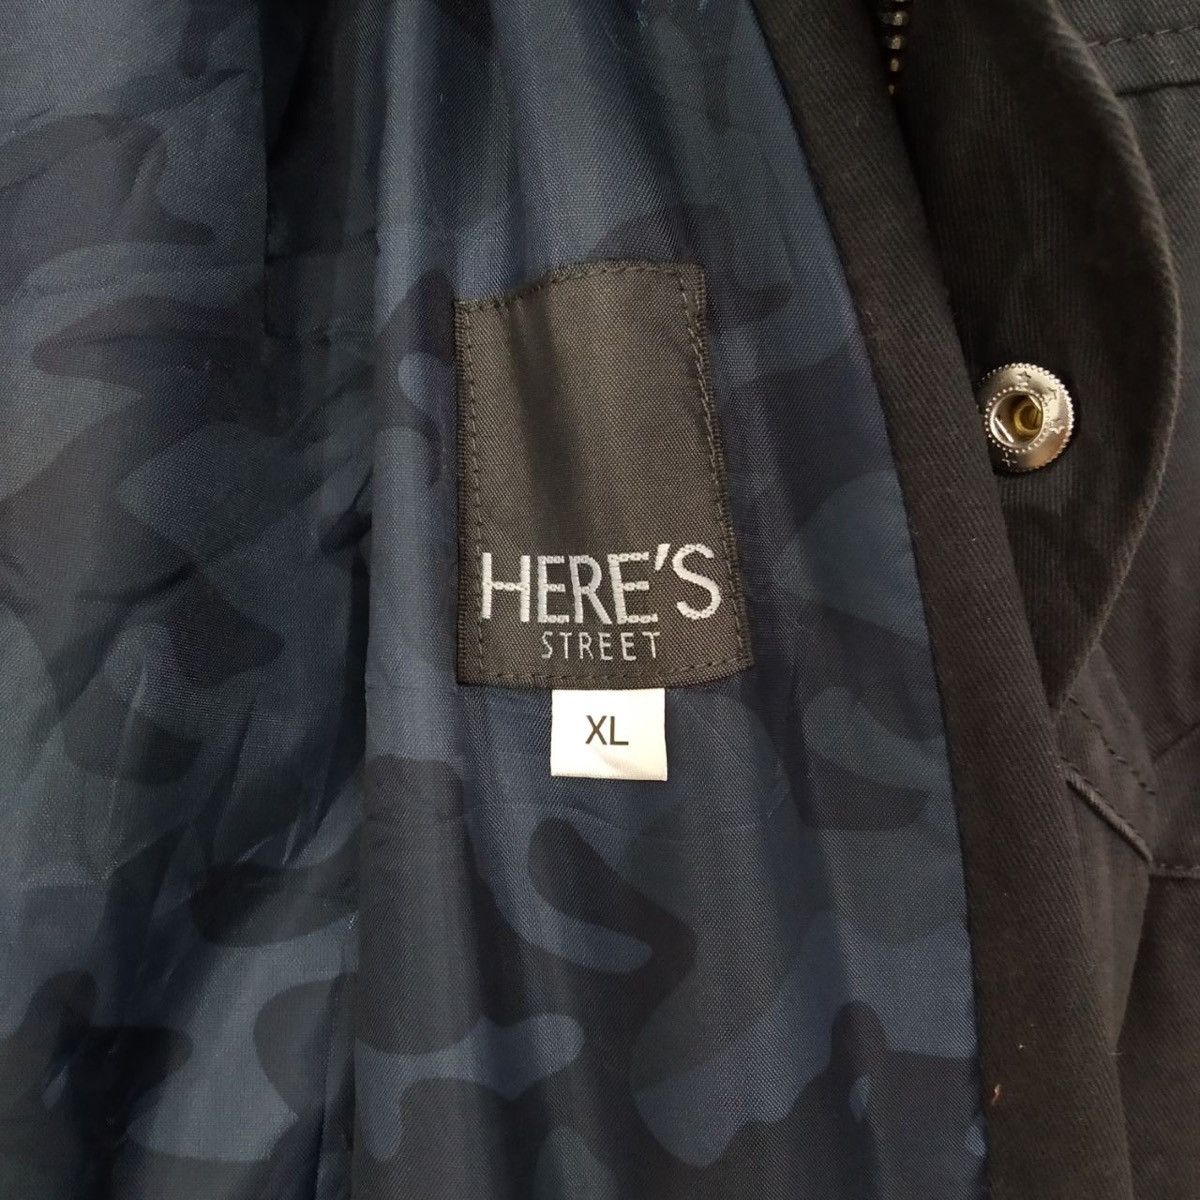 Designer Japan Brand Here’s Street Hidden Hoodie Jacket Size US M / EU 48-50 / 2 - 6 Preview